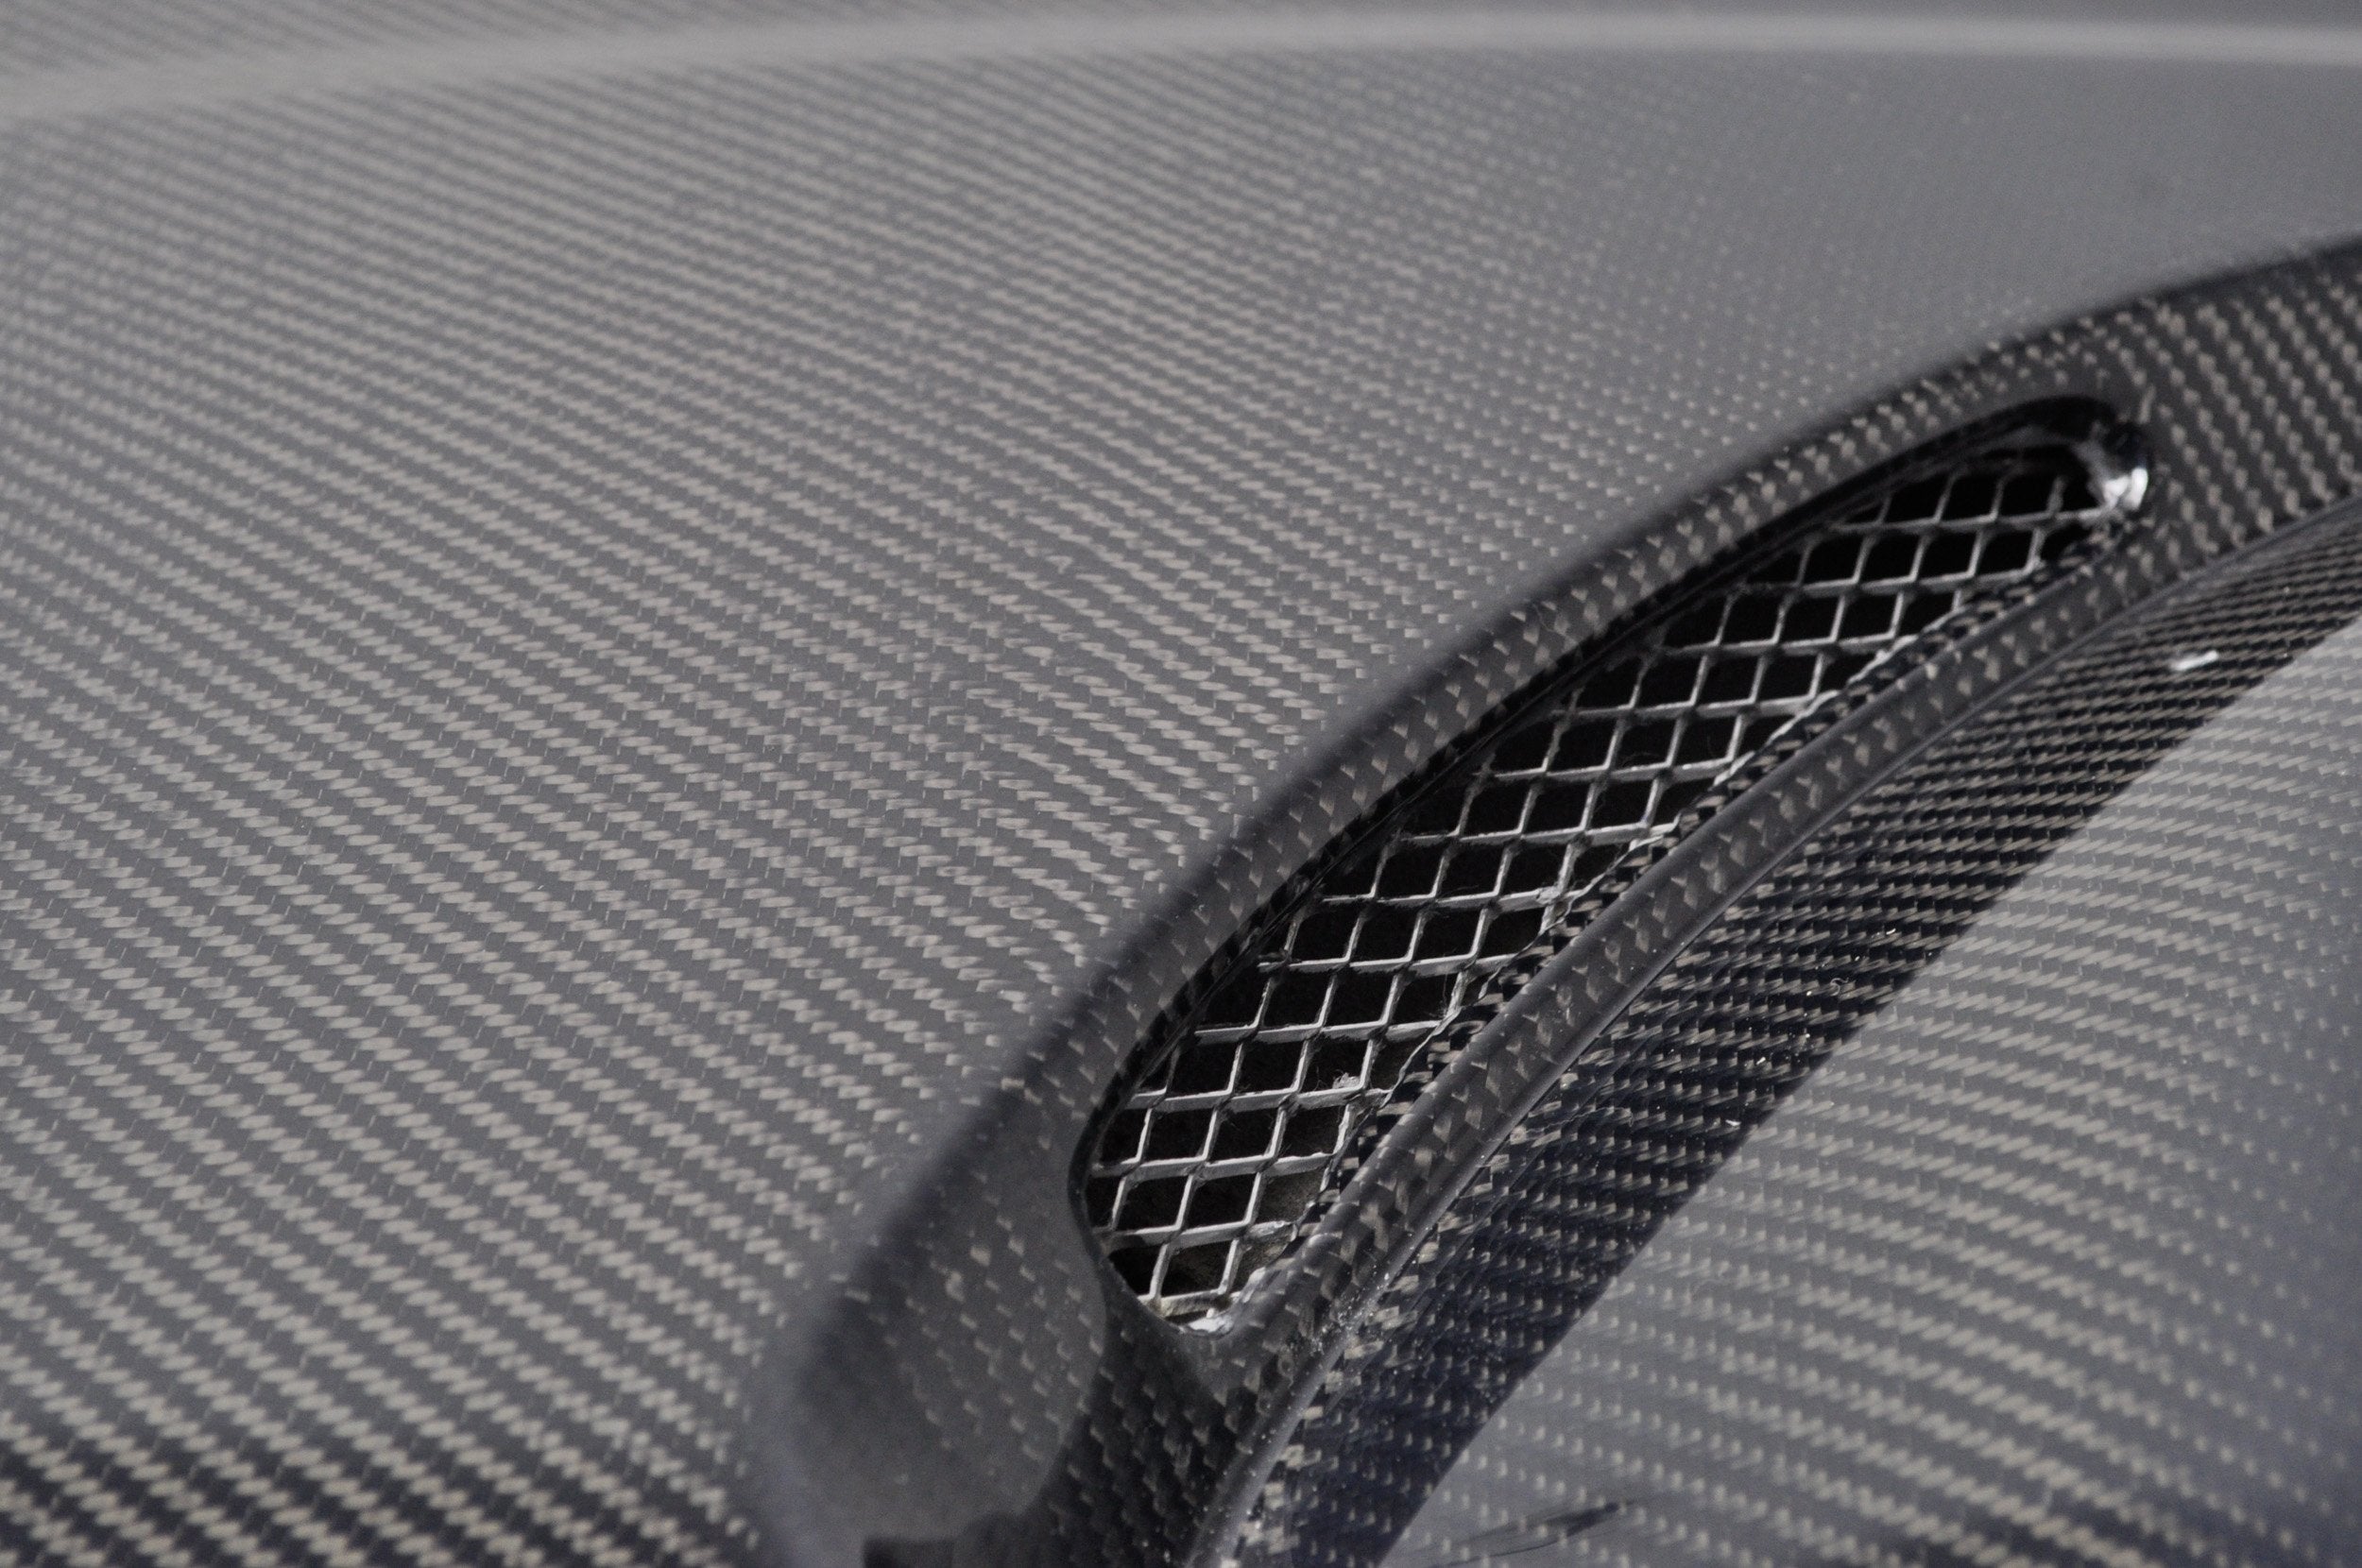 CMST Tuning Carbon Fiber Hood Bonnet Ver.2 for Chevrolet Camaro 5th Gen 2010-2015